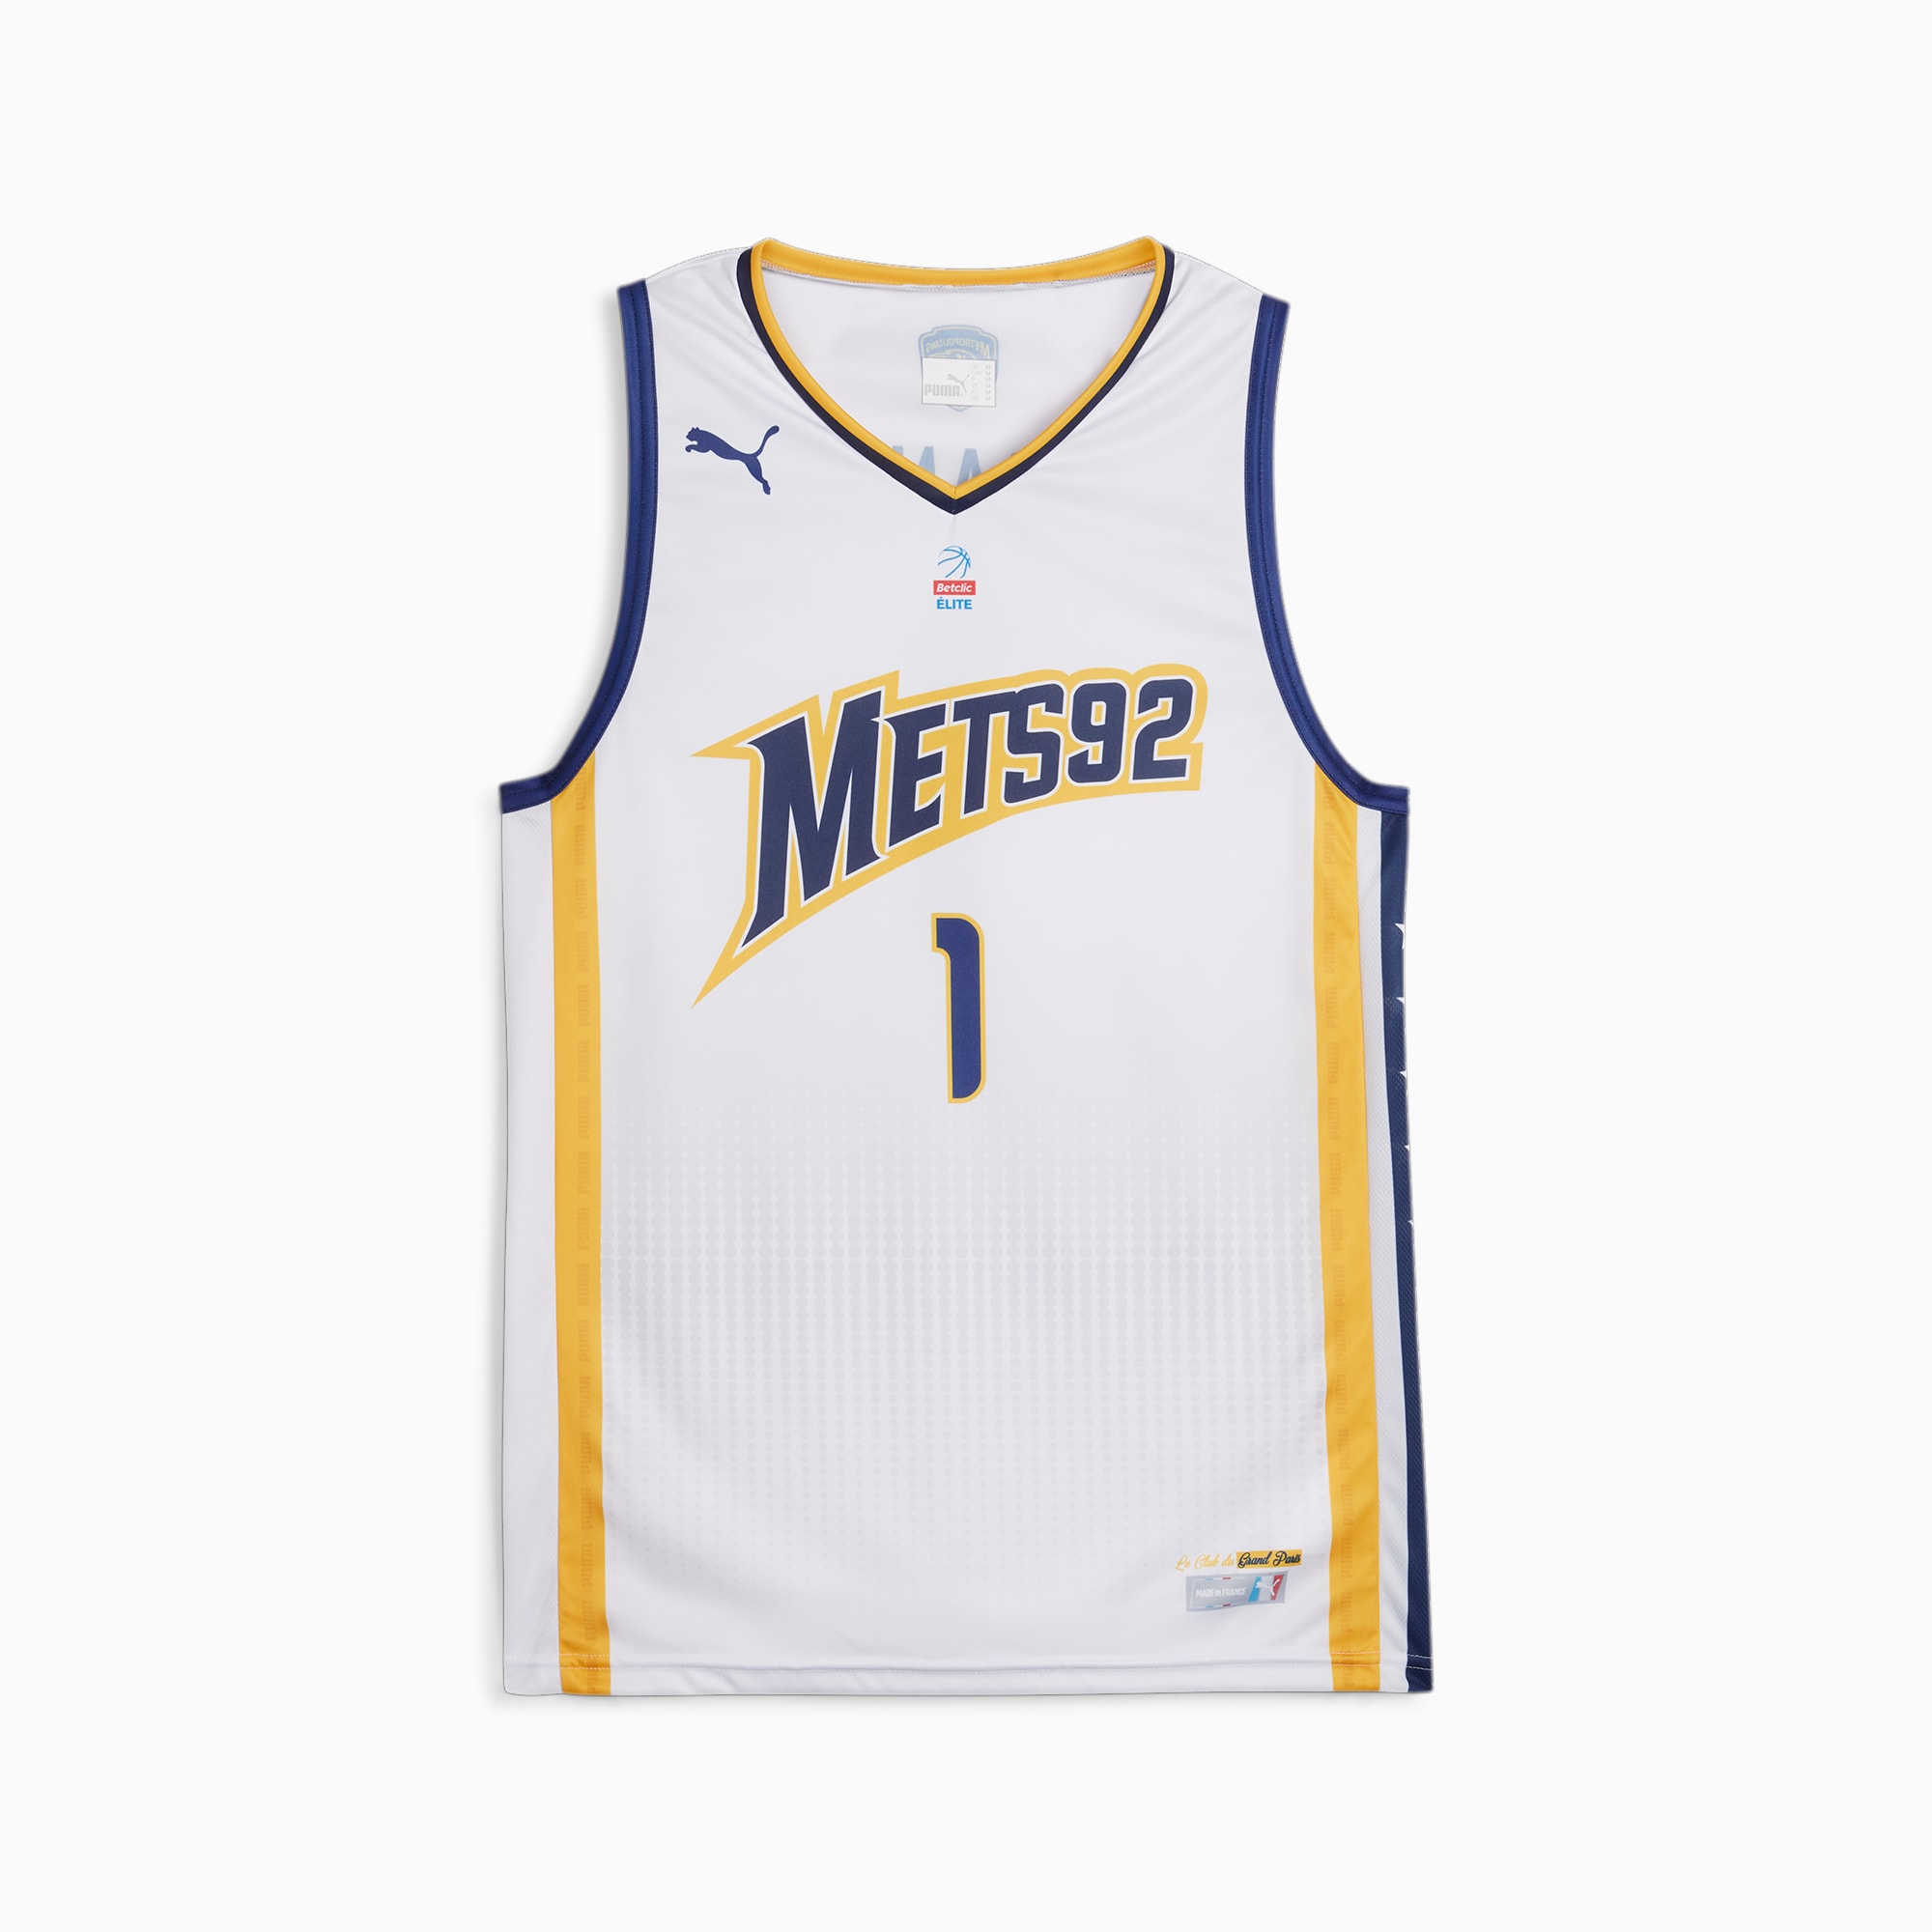 mets92 basketball jersey